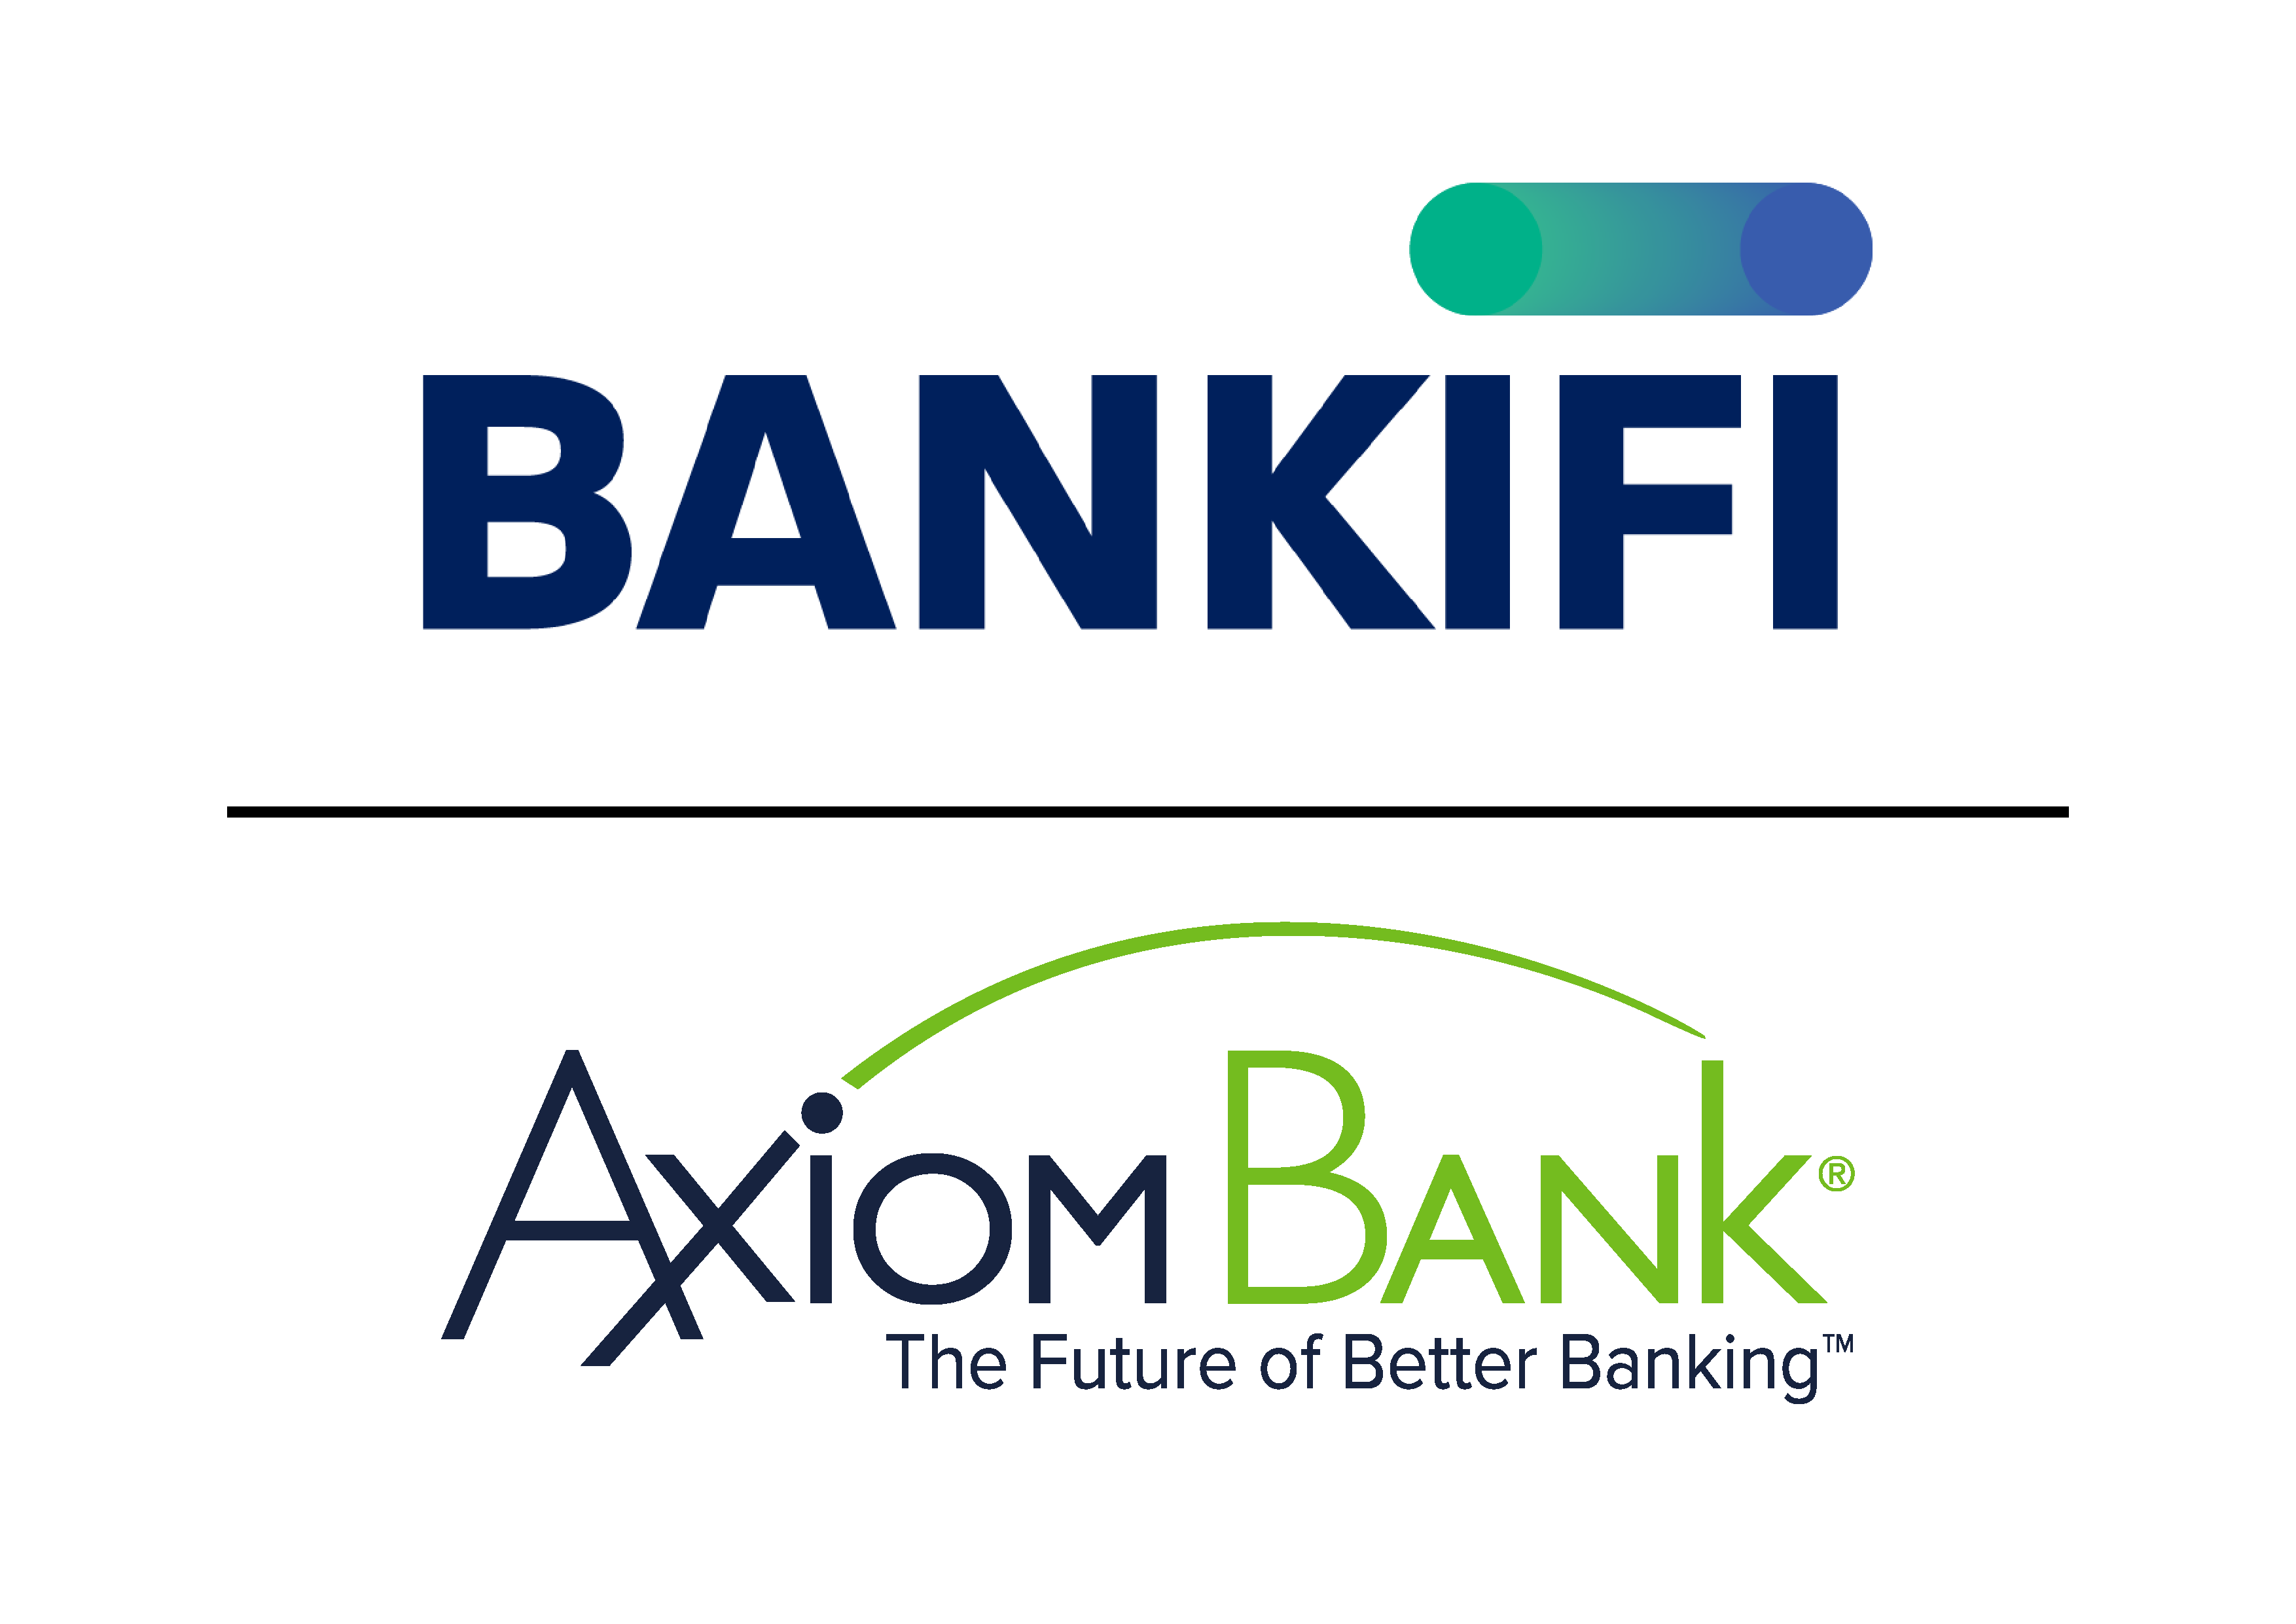 Press release: BankiFi announces first North American customer - Axiom Bank